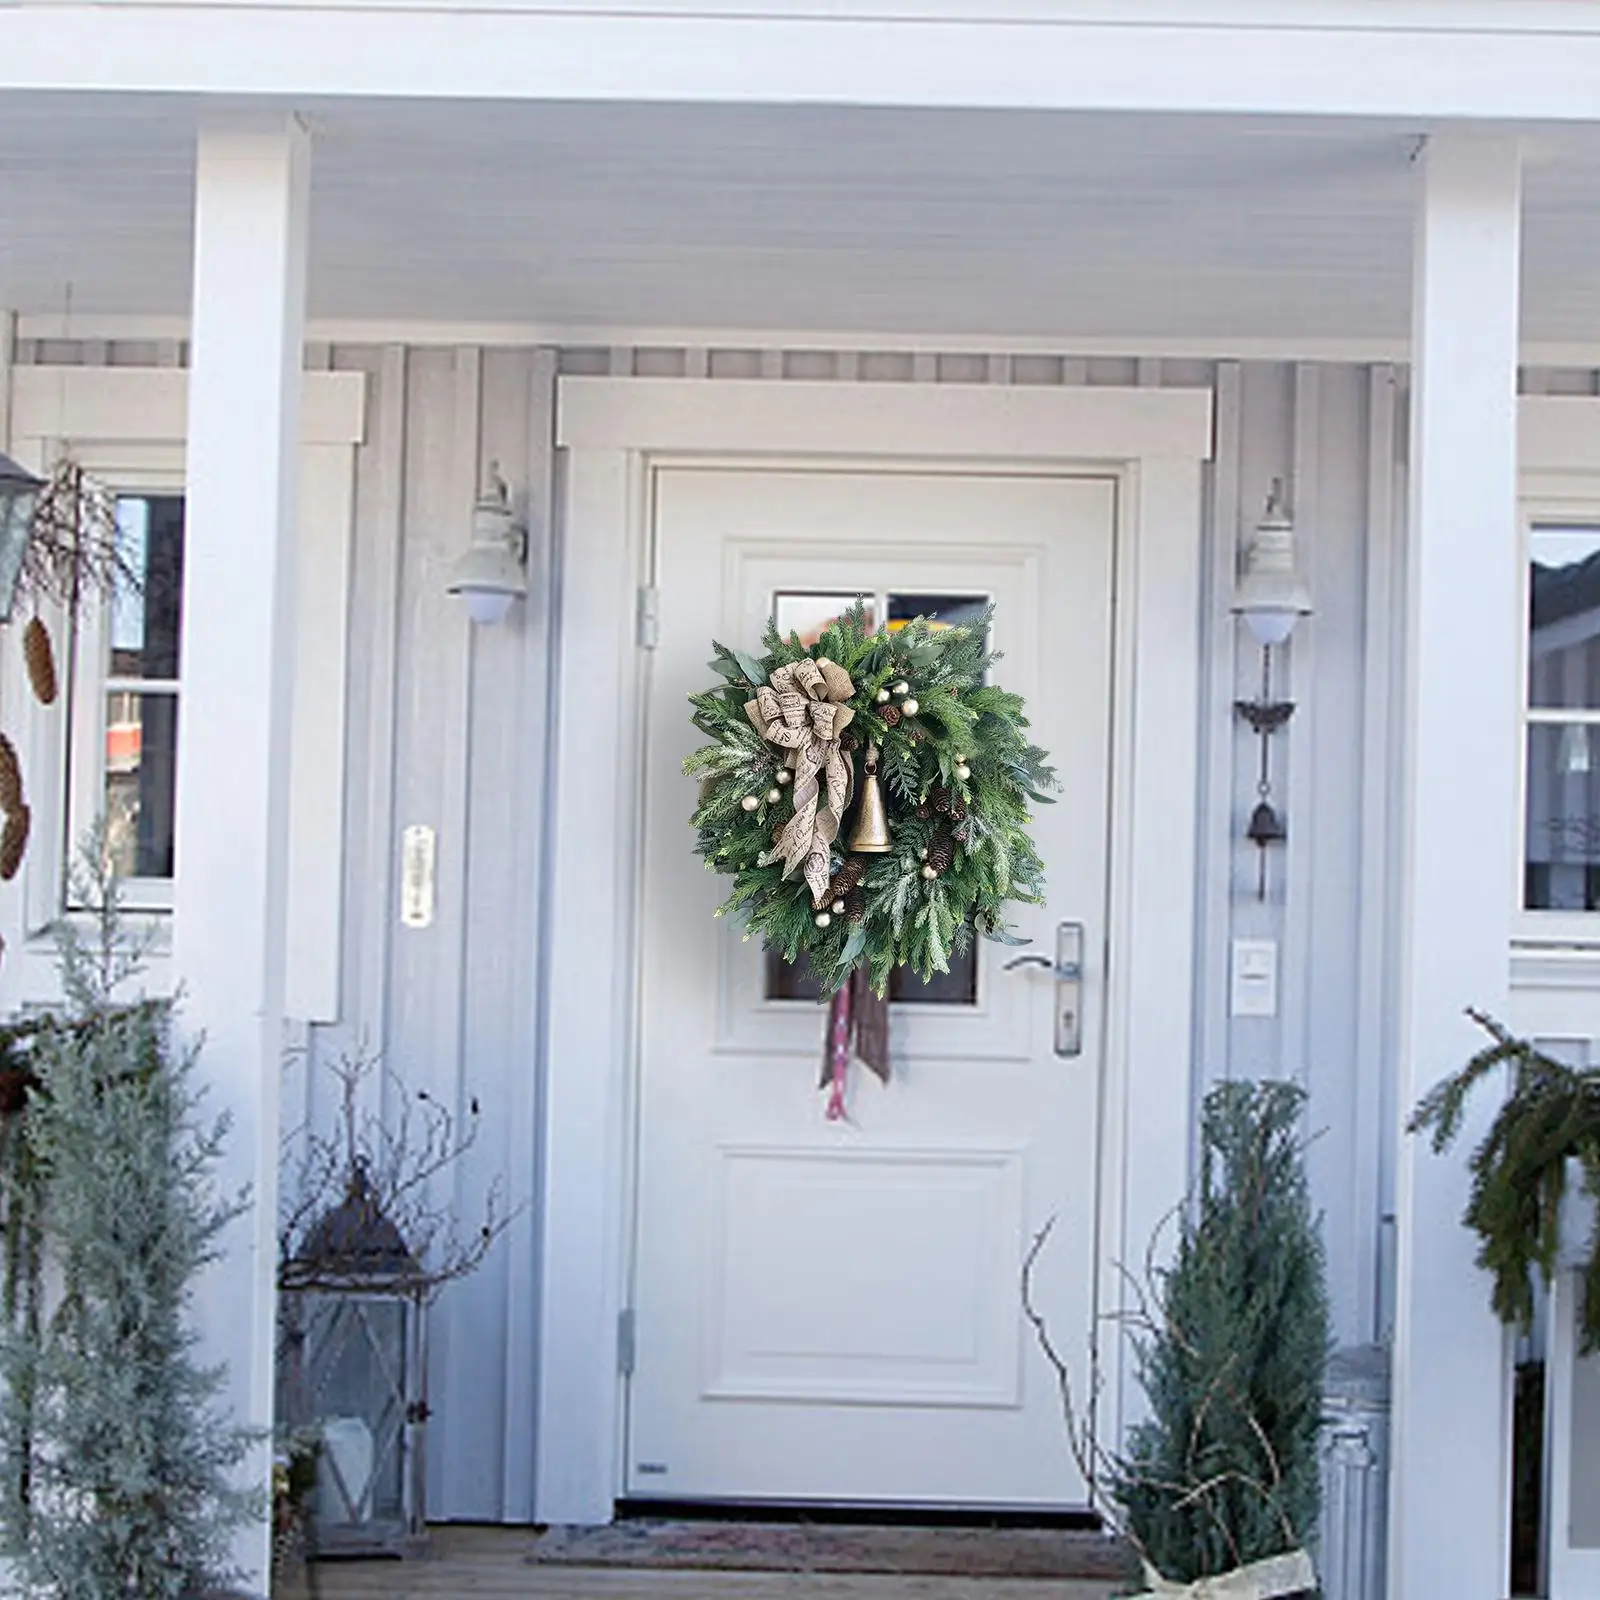 Artificial Flower Wreath Christmas Wall Hanging Garland Ornament Winter Wreath Autumn for Door Home Window Wedding Decor